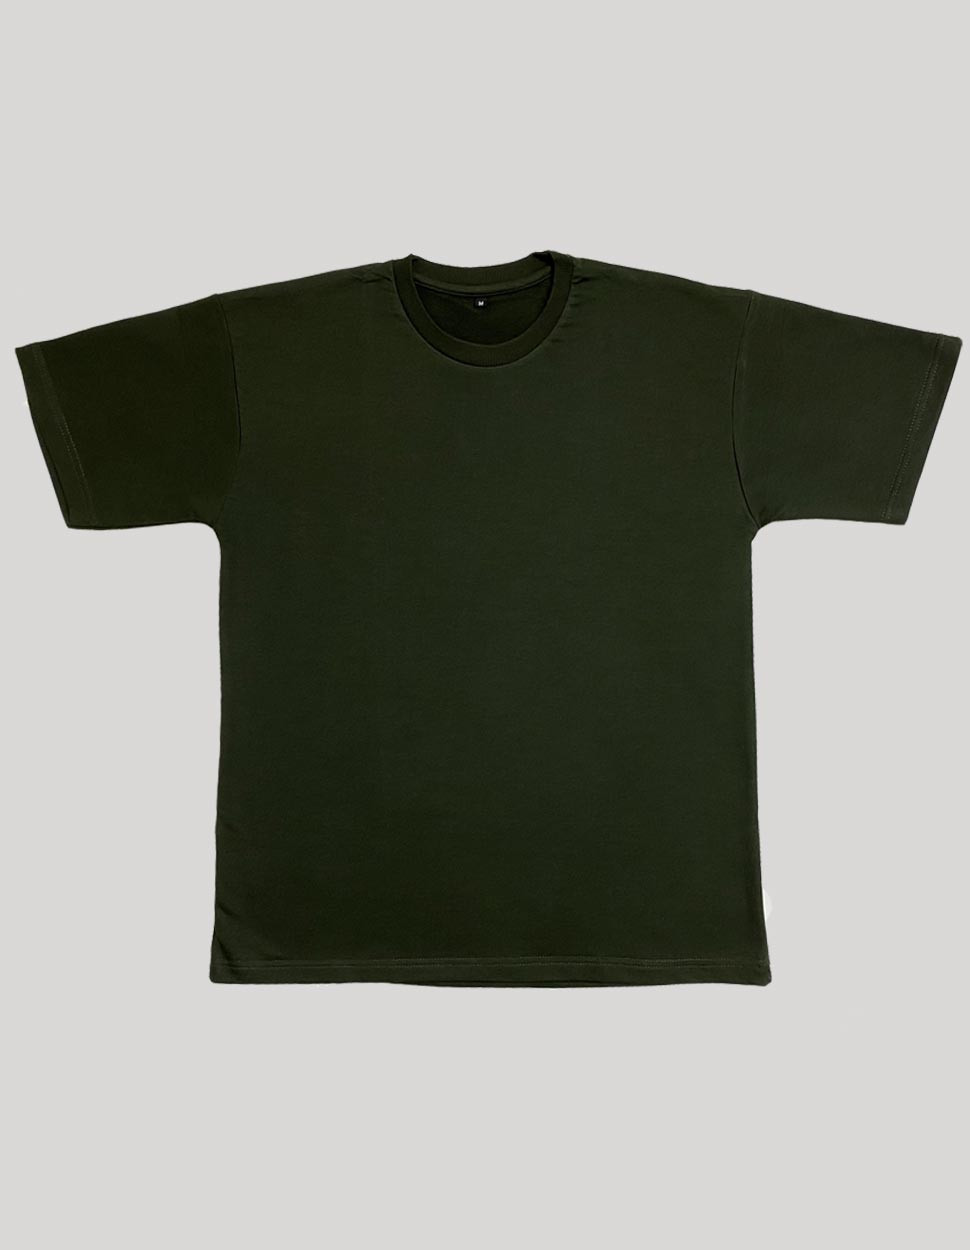 Olive Green TerryCotton T-Shirt